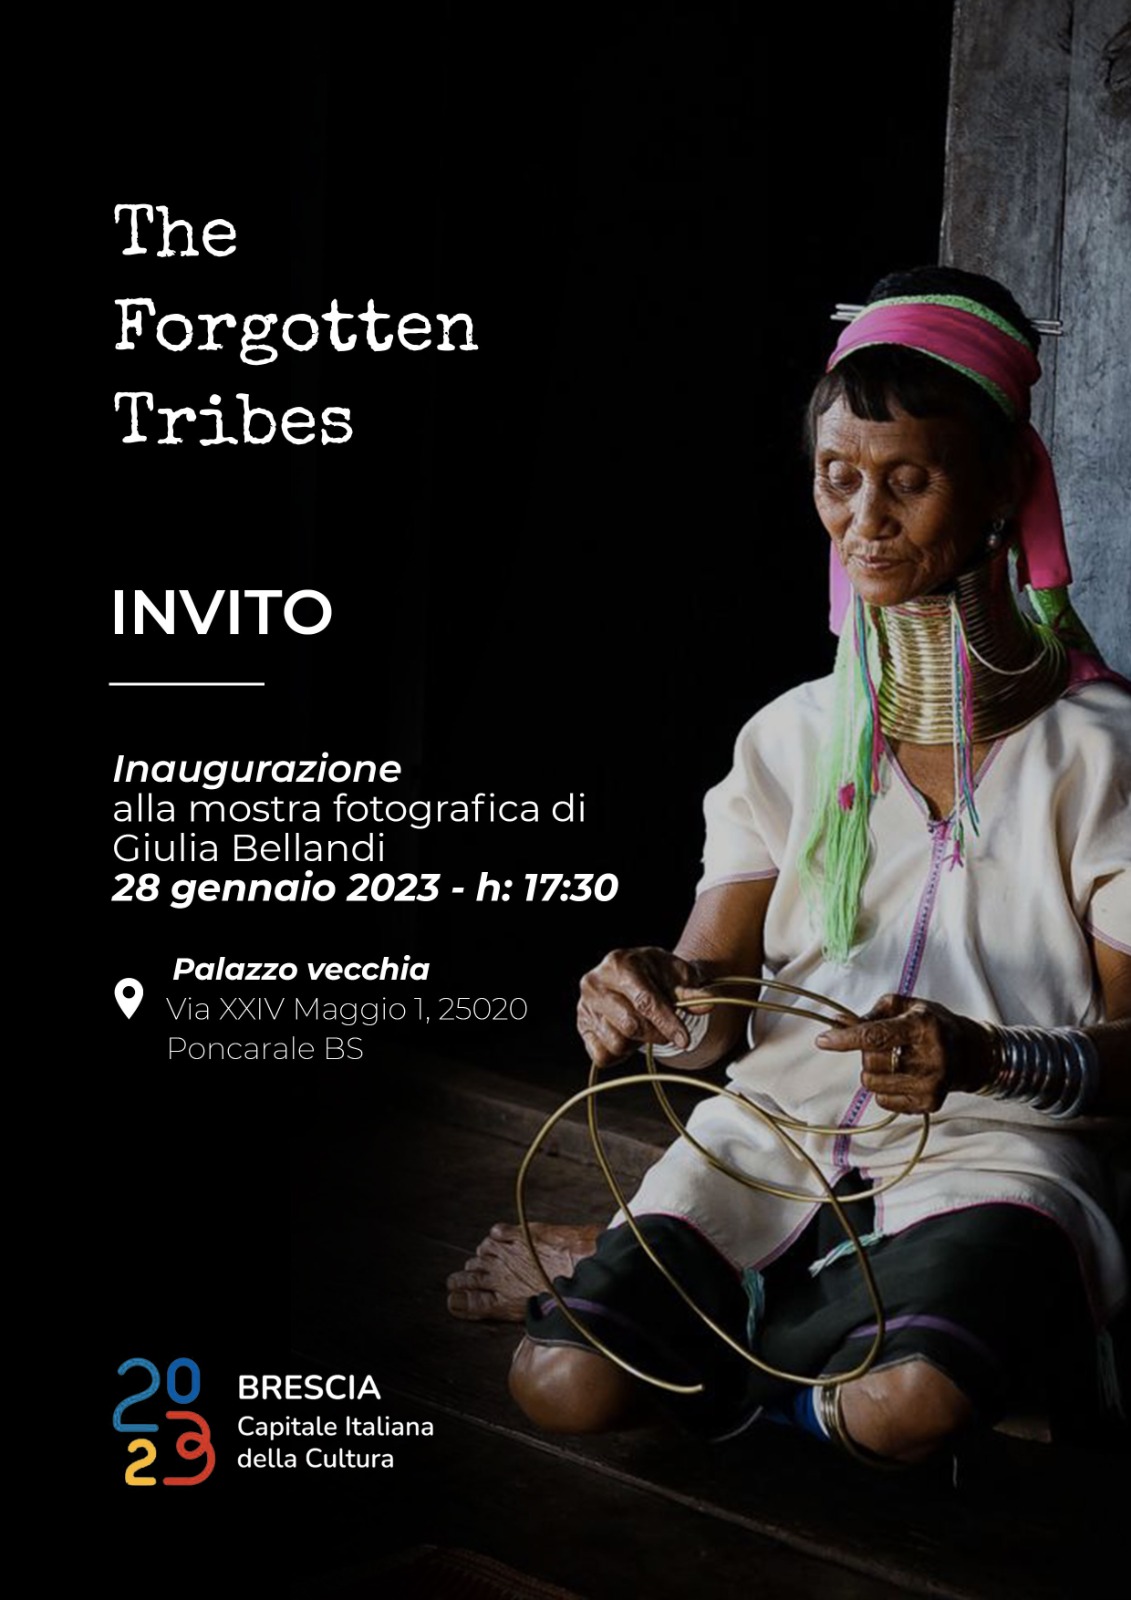 Giulia Bellandi - The Forgotten Tribes